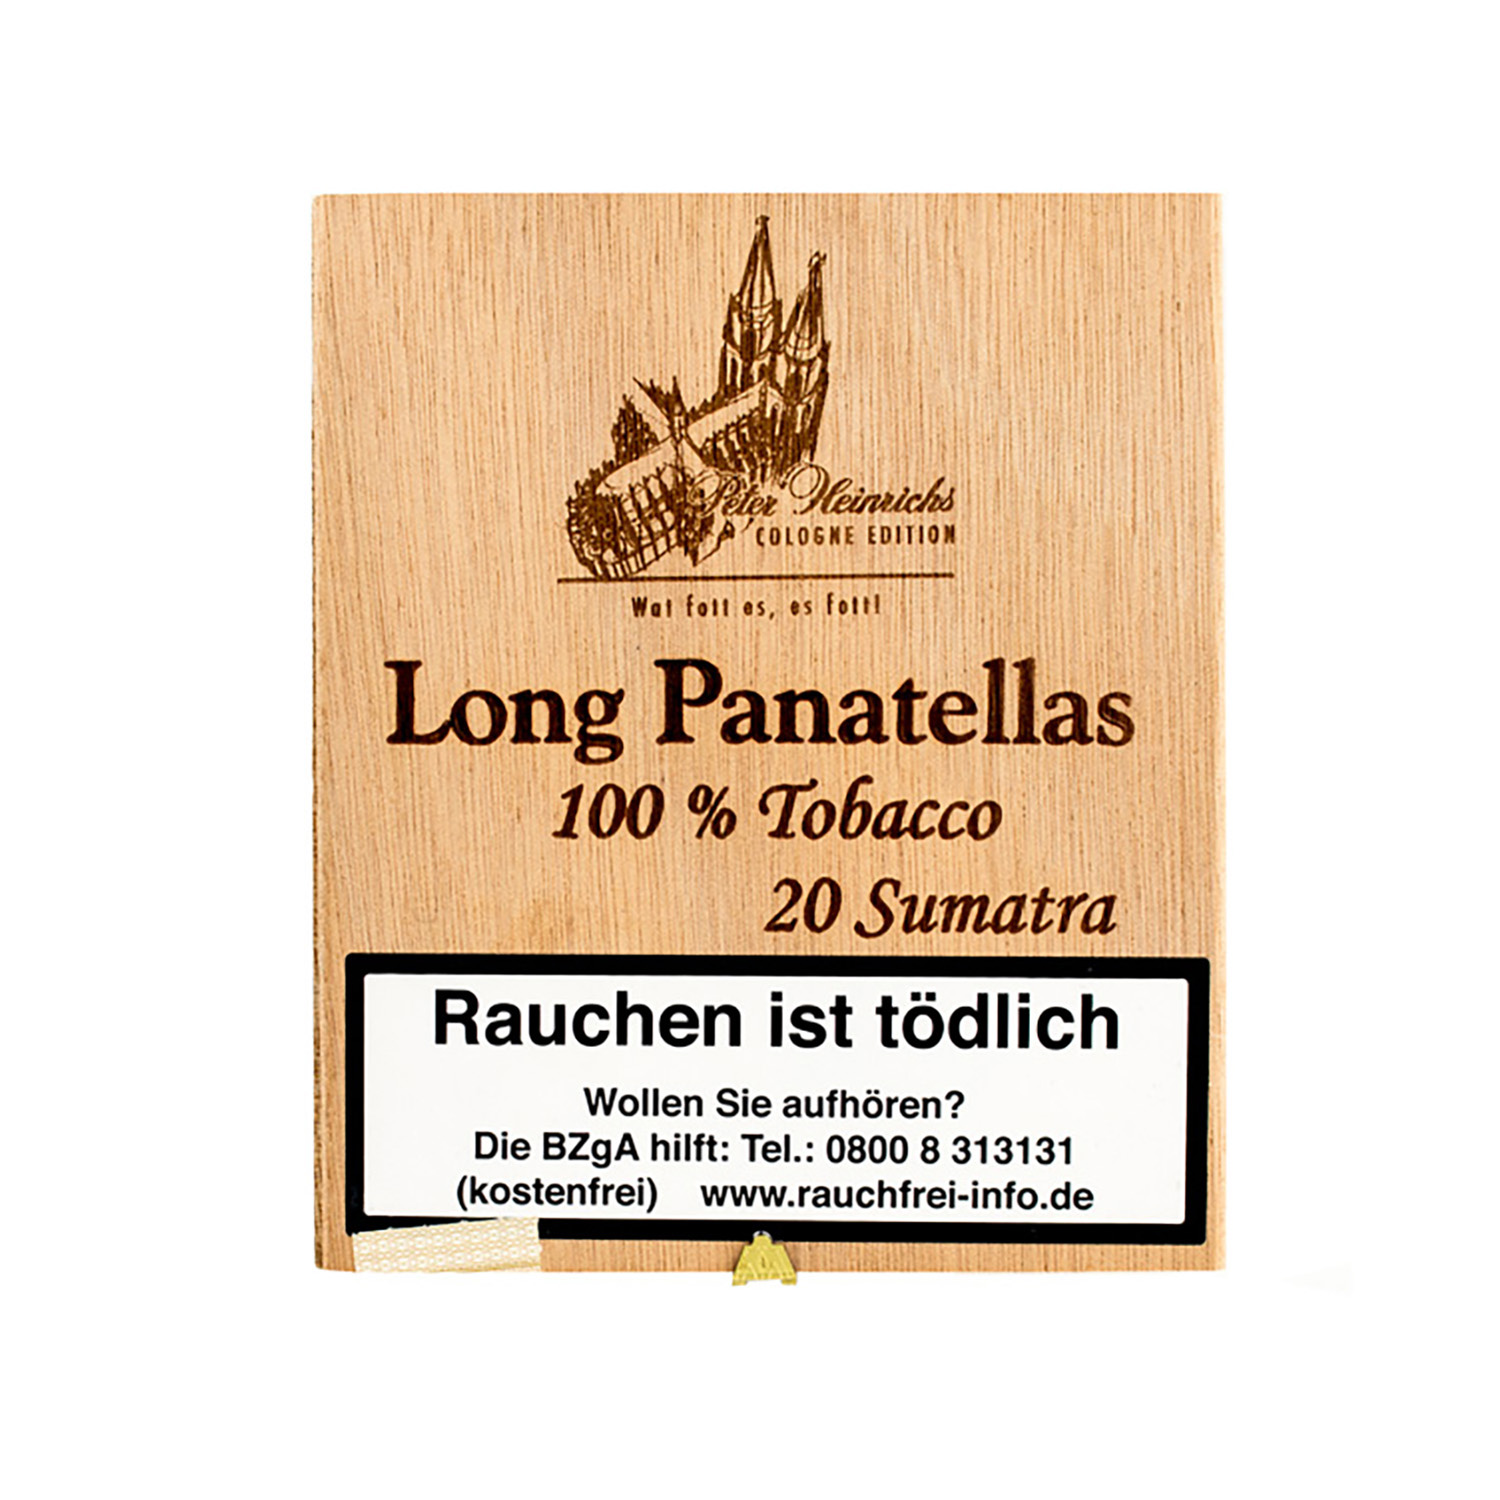 Peter Heinrichs Long Panatellas - Cologne Edition Sumatra